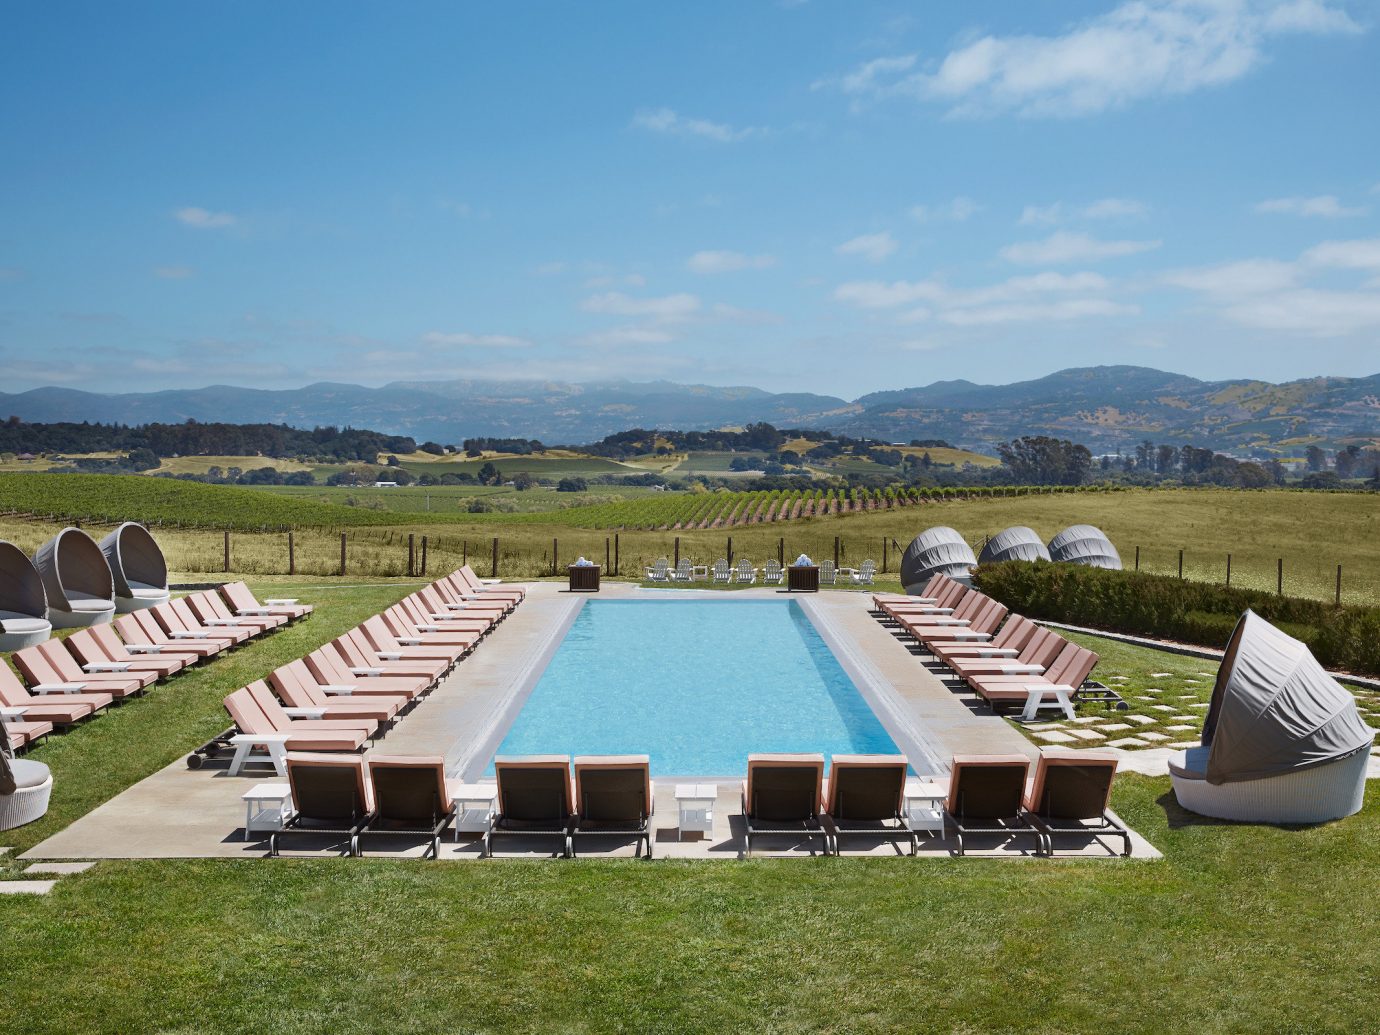 Hotels Romance Spa Retreats Trip Ideas grass outdoor swimming pool sport venue mountain estate lawn stadium backyard set